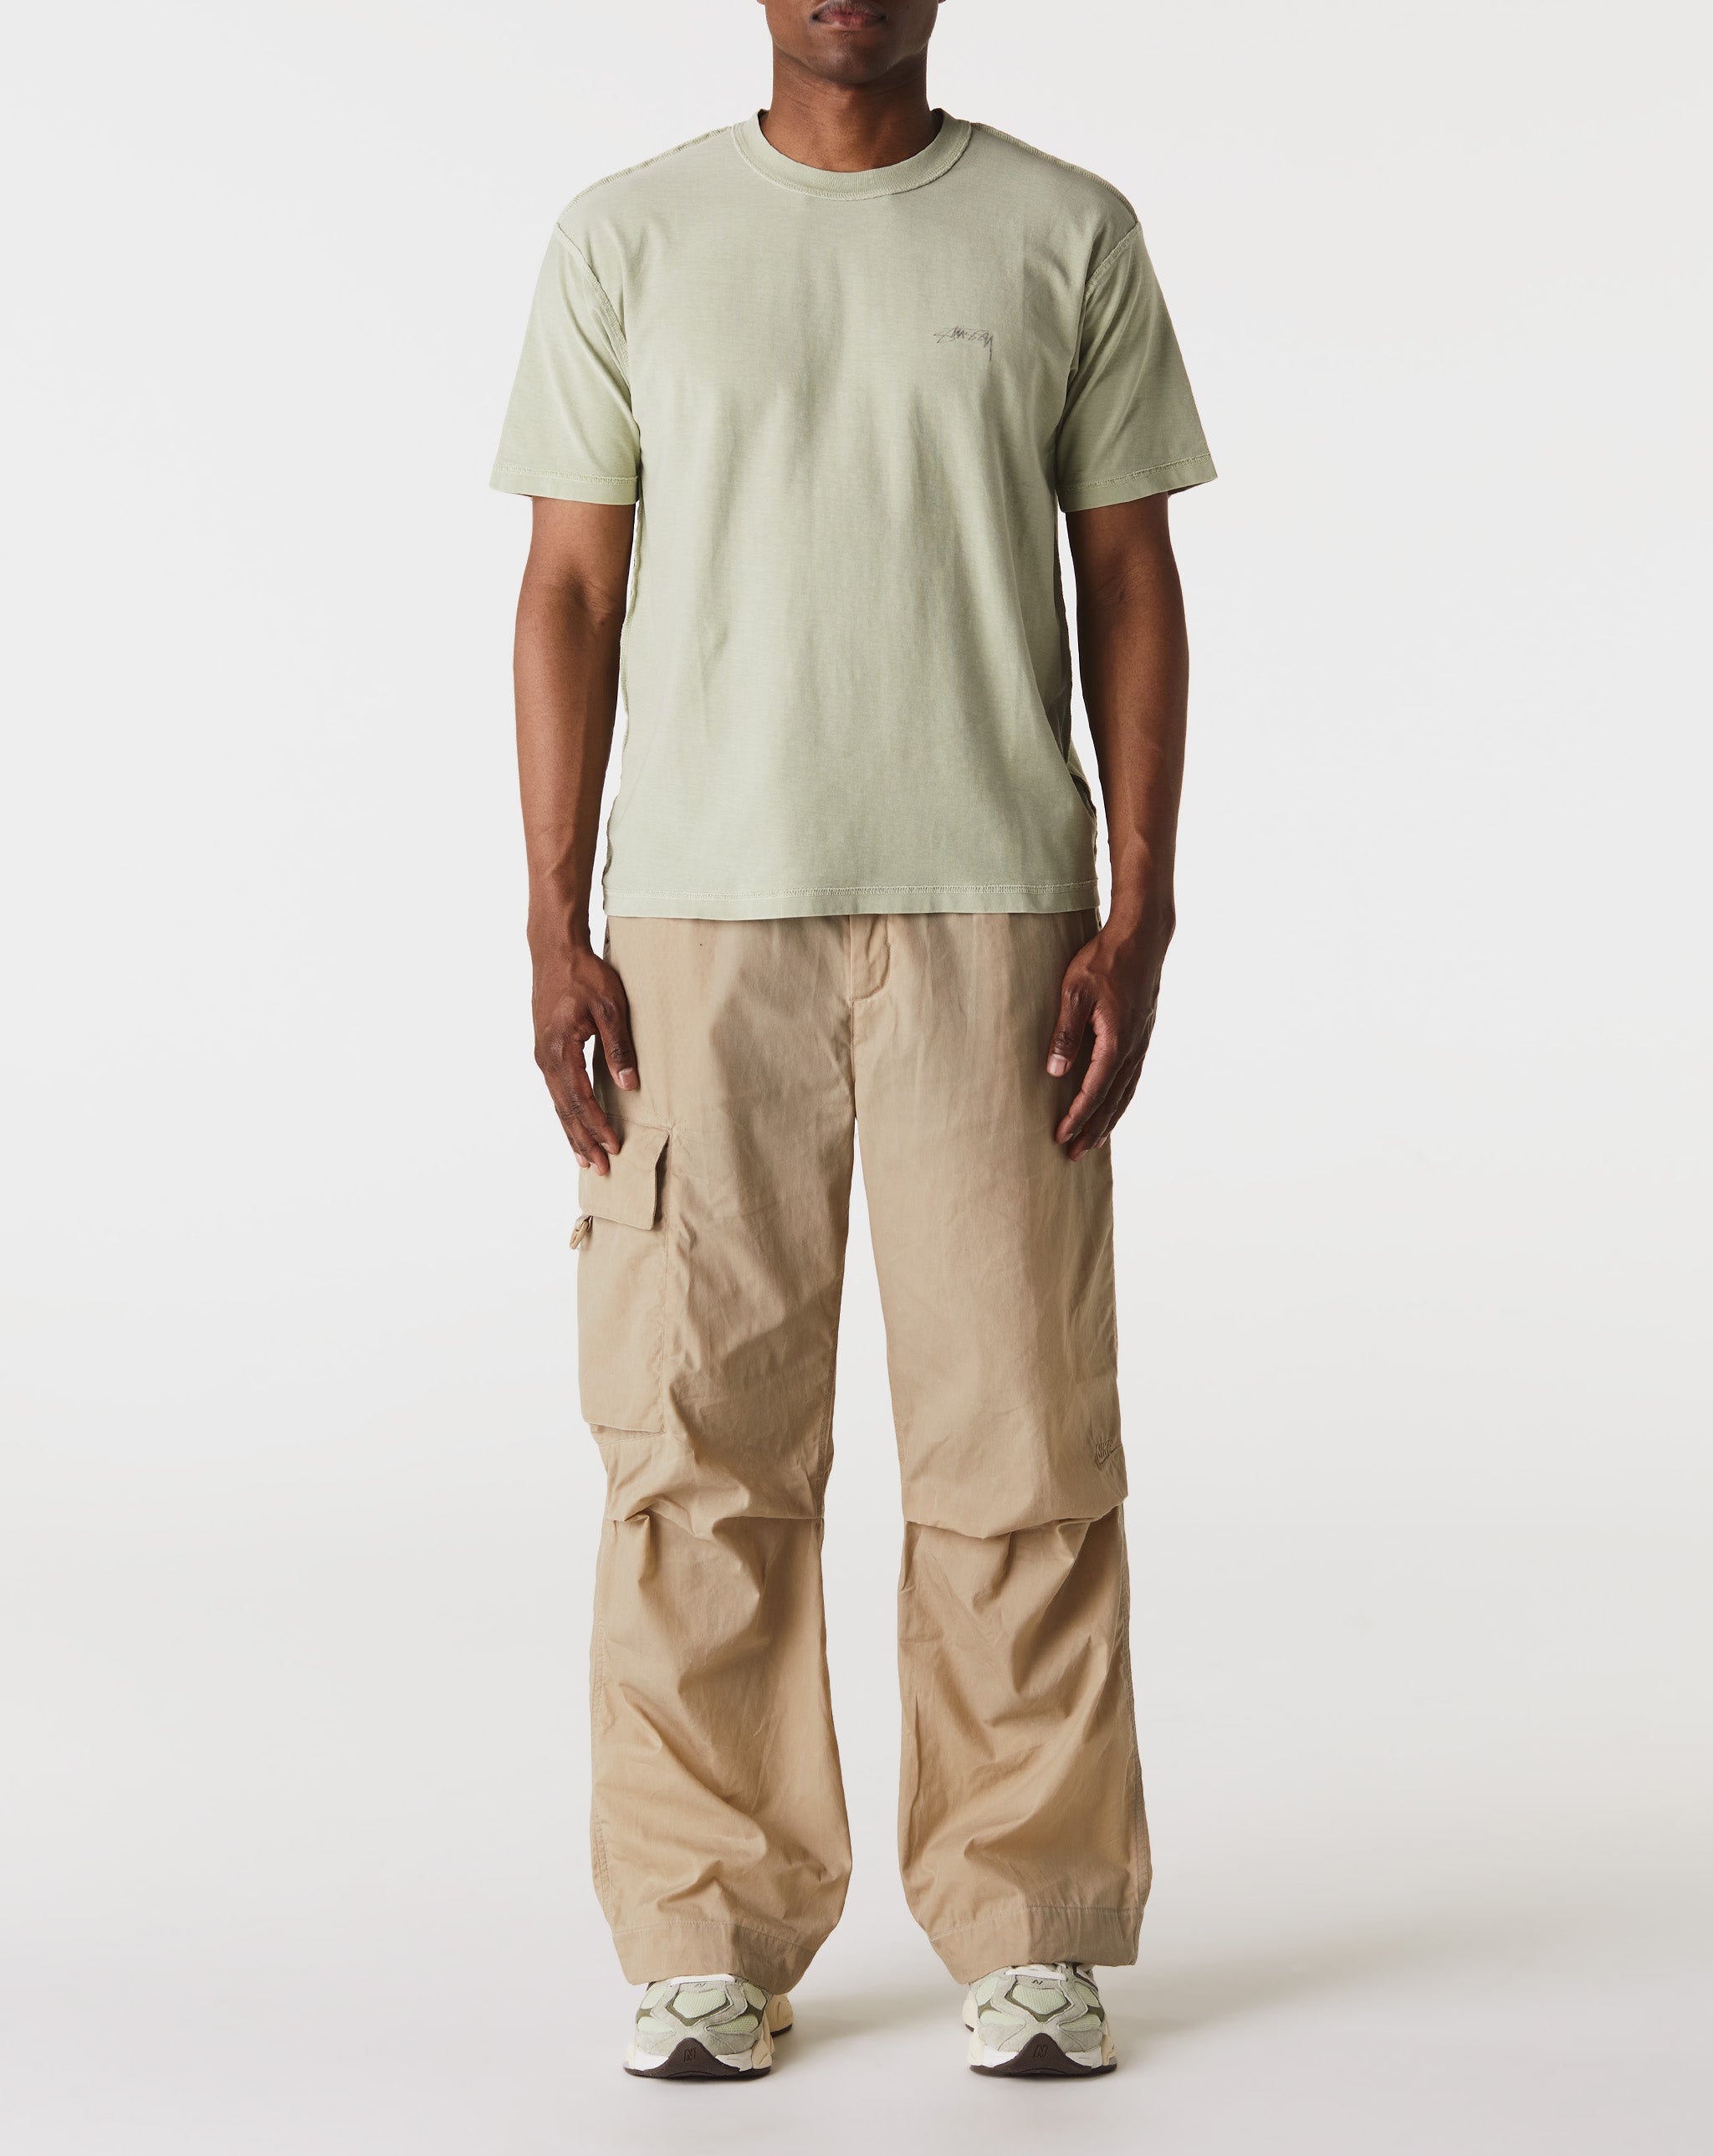 Stüssy Lazy T-Shirt  - Cheap Cerbe Jordan outlet